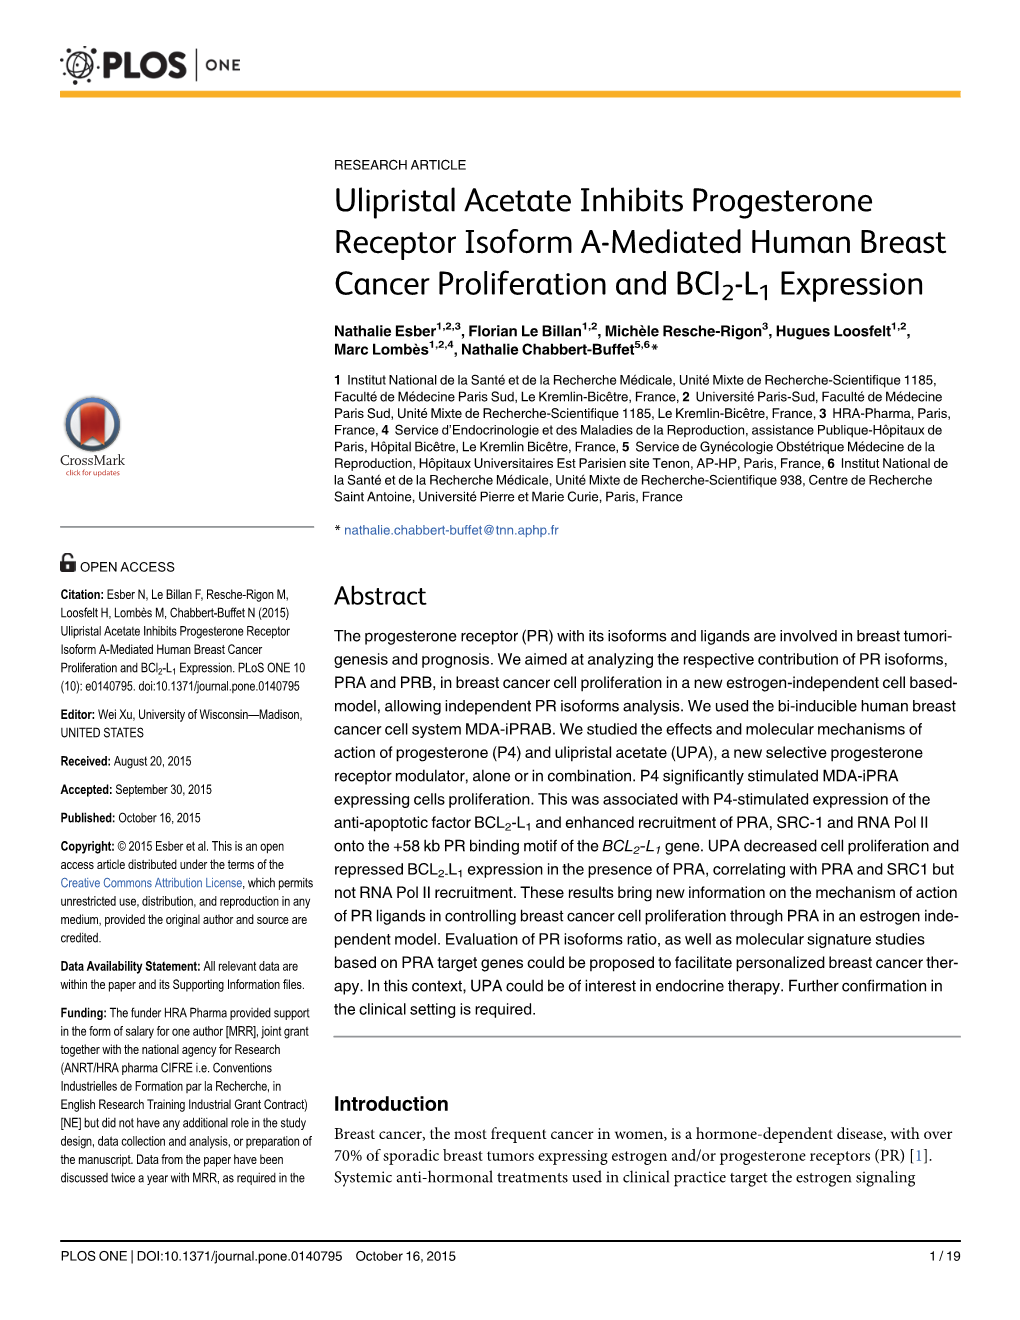 Ulipristal Acetate Inhibits Progesterone Receptor Isoform A-Mediated Human Breast